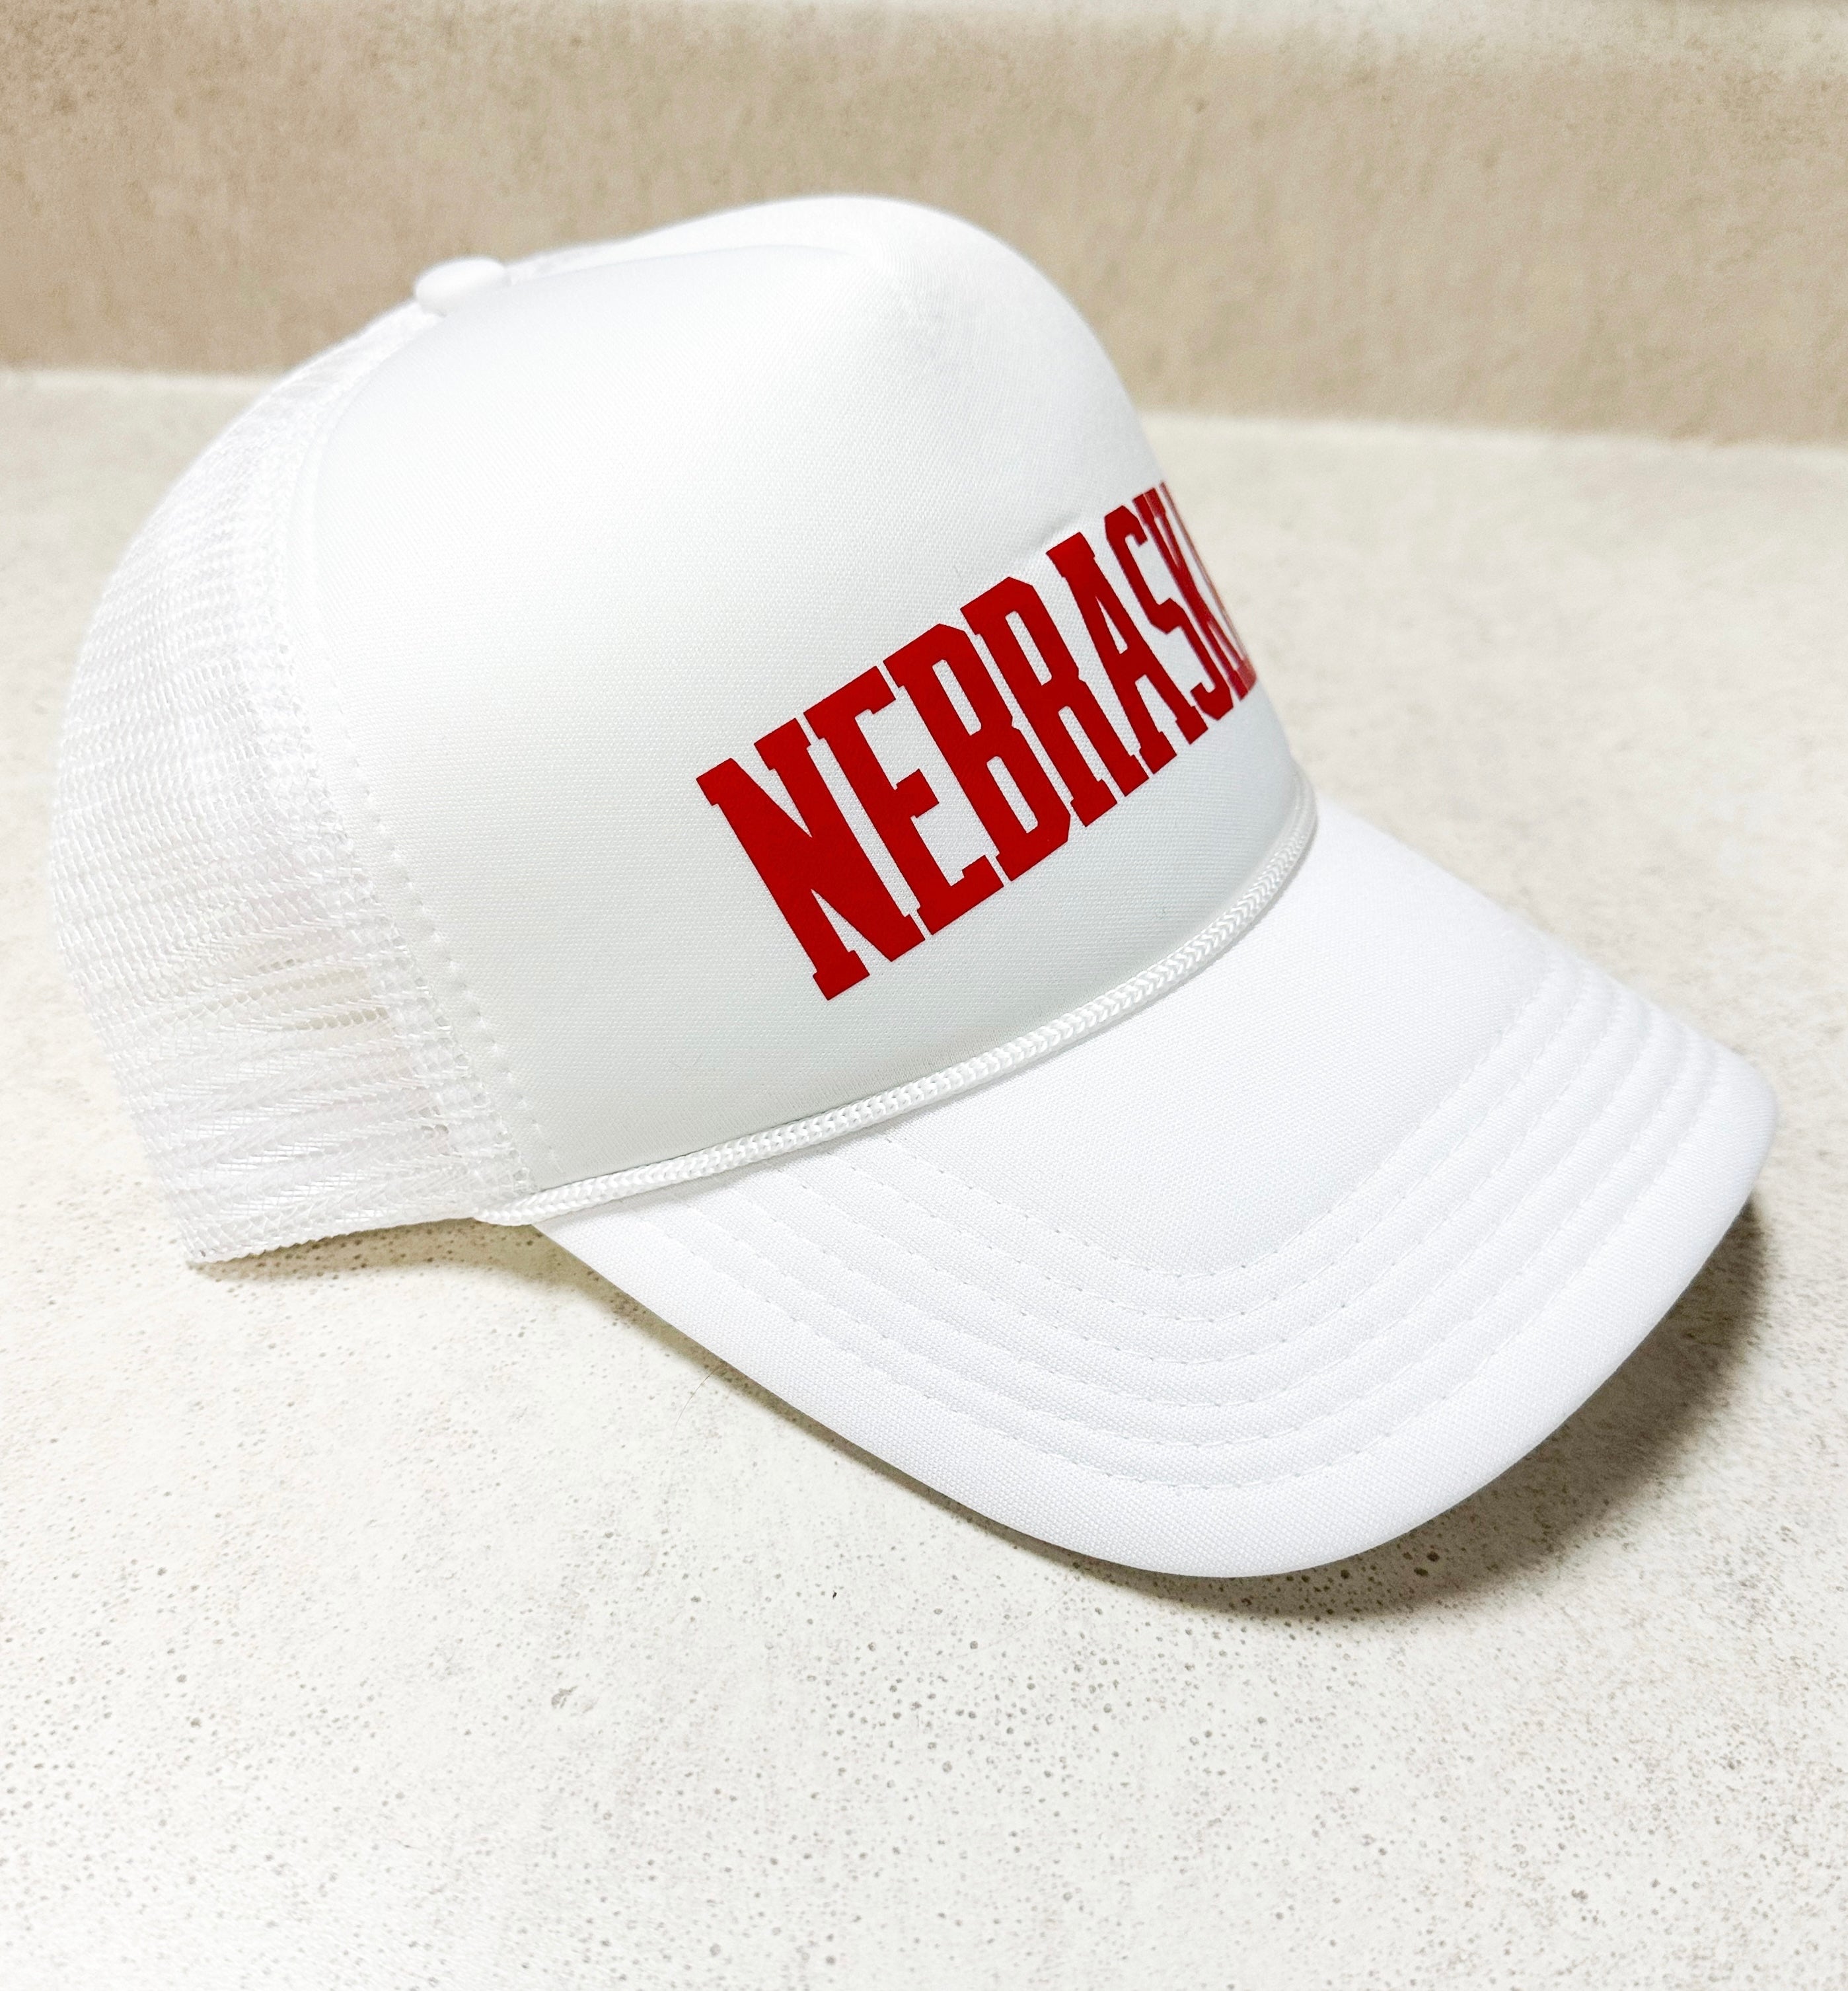 Nebraska White Hat